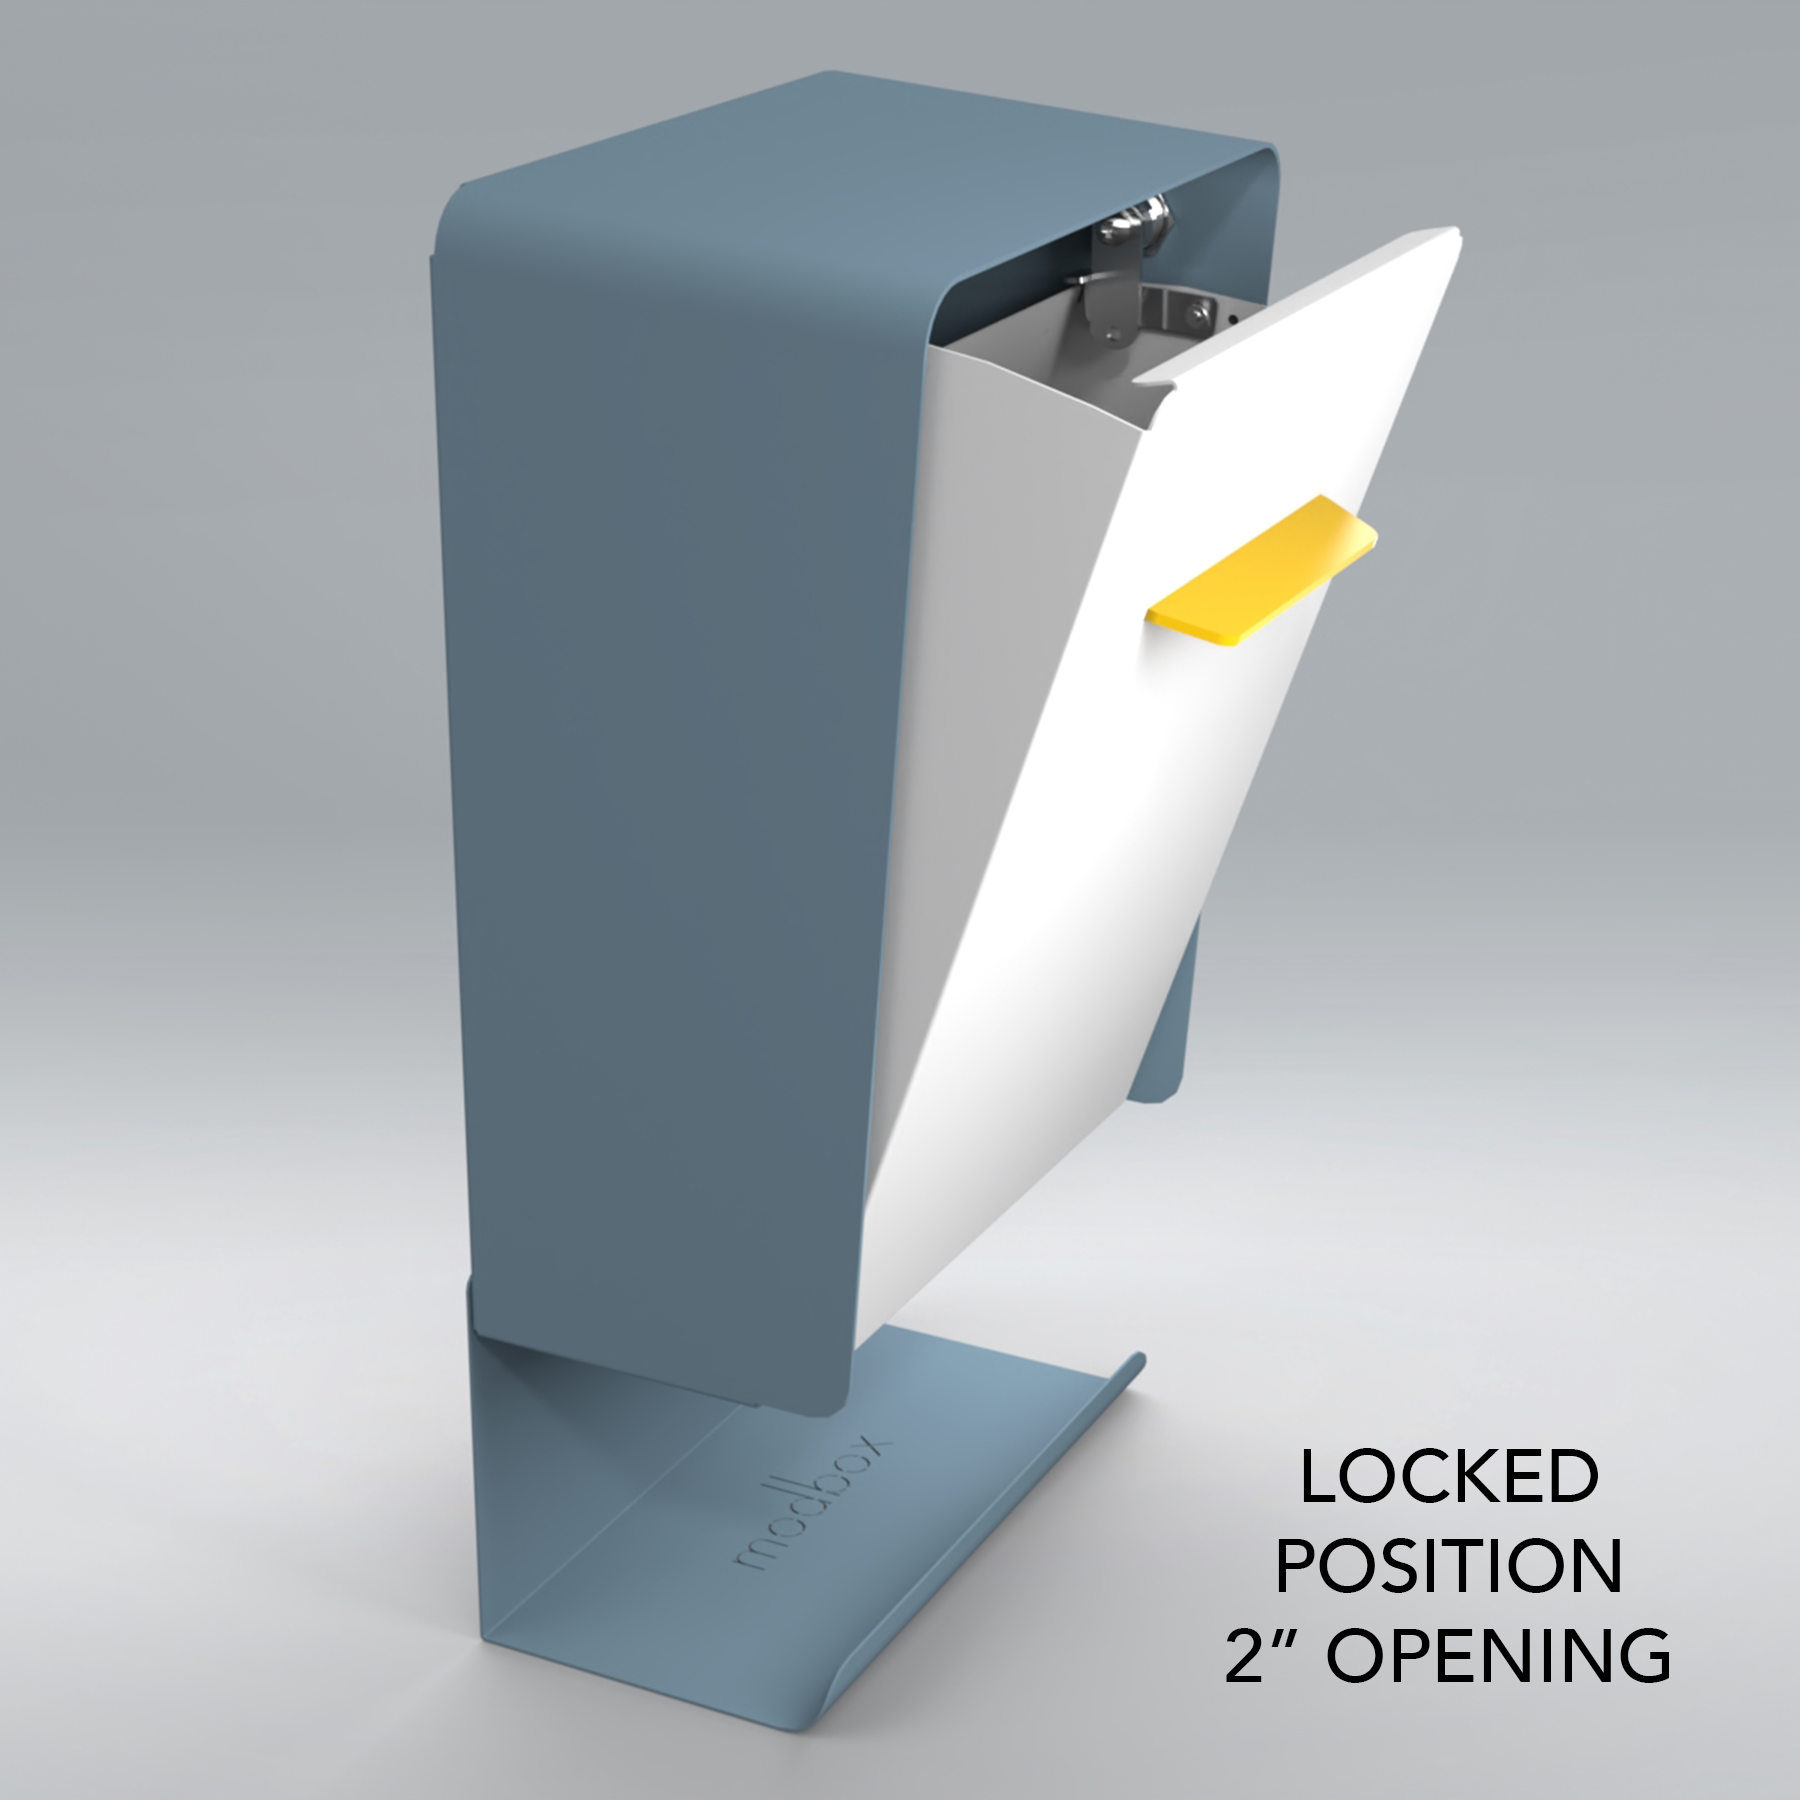 3_Locked Position - 2" open modbox wall mounted locking mailboxing